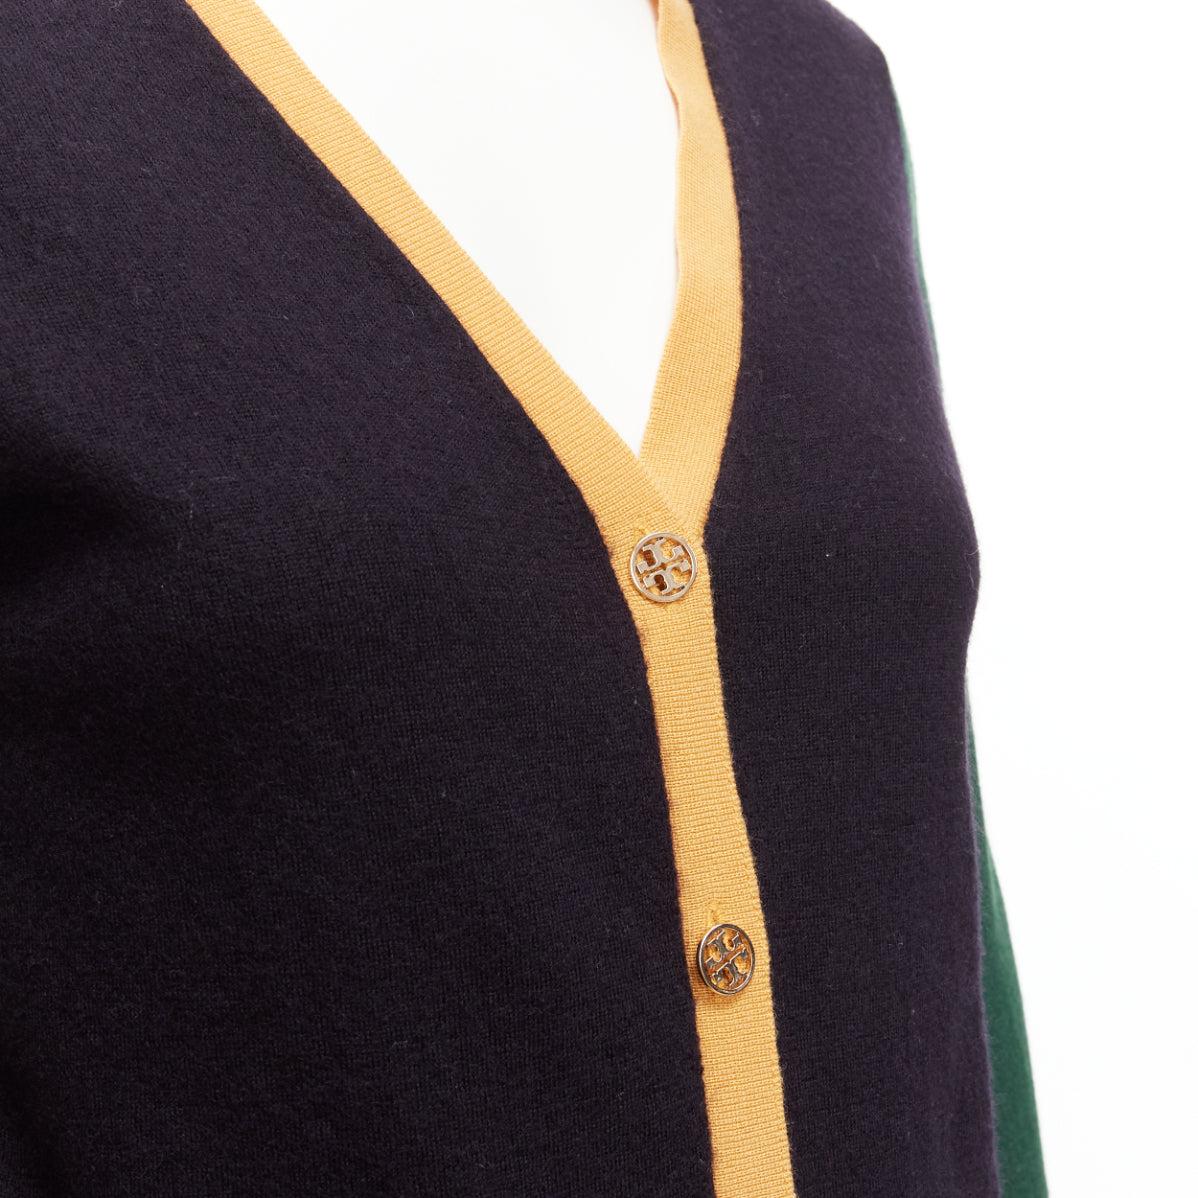 TORY BURCH 100% merino wool colorblocked logo button cardigan sweater M For Sale 4